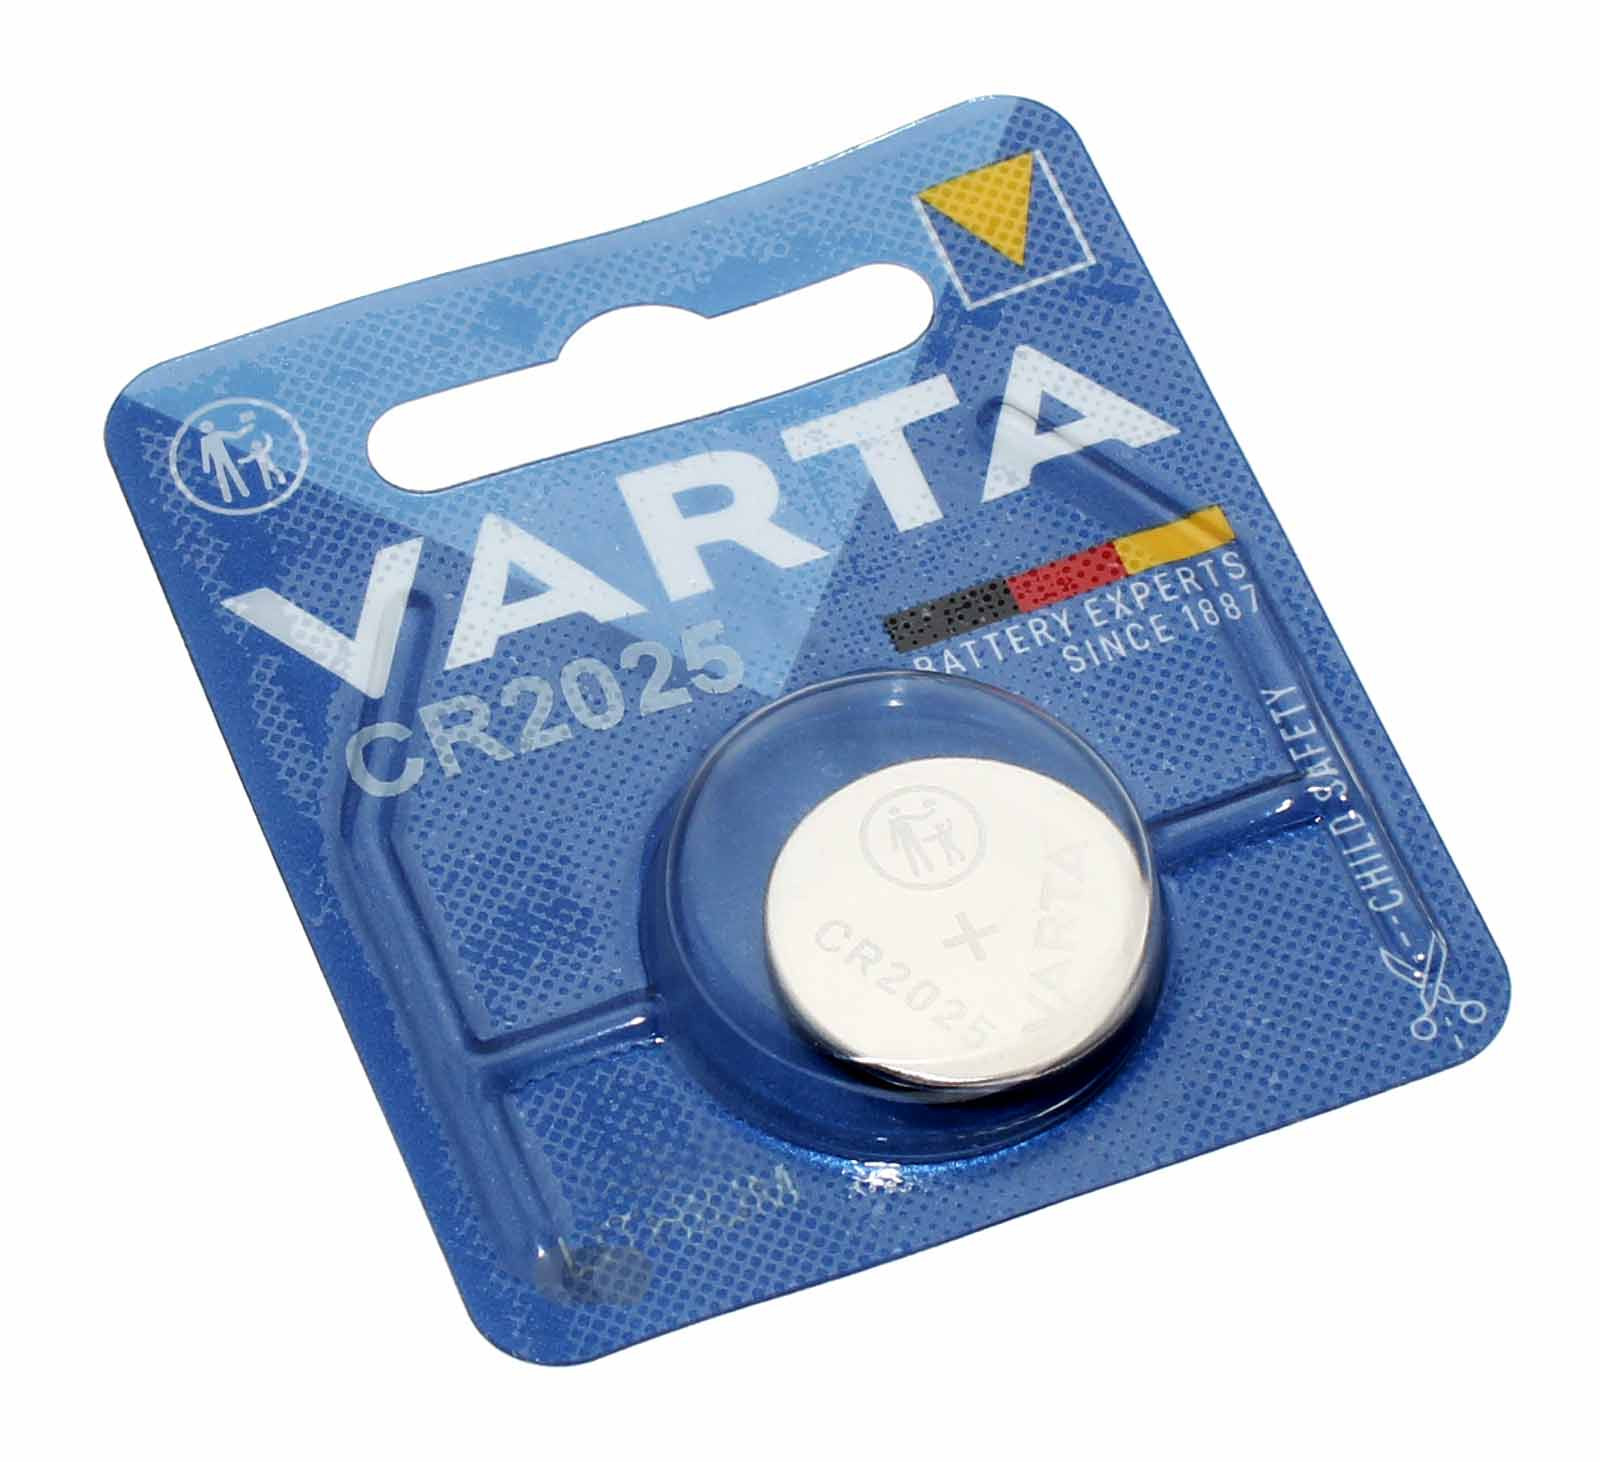 Varta CR2025 Lithium Knopfzelle Batterie für Uhren Autoschlüssel u.a., wie ECR2025, DL2025, KCR2025, 3V, 157mAh